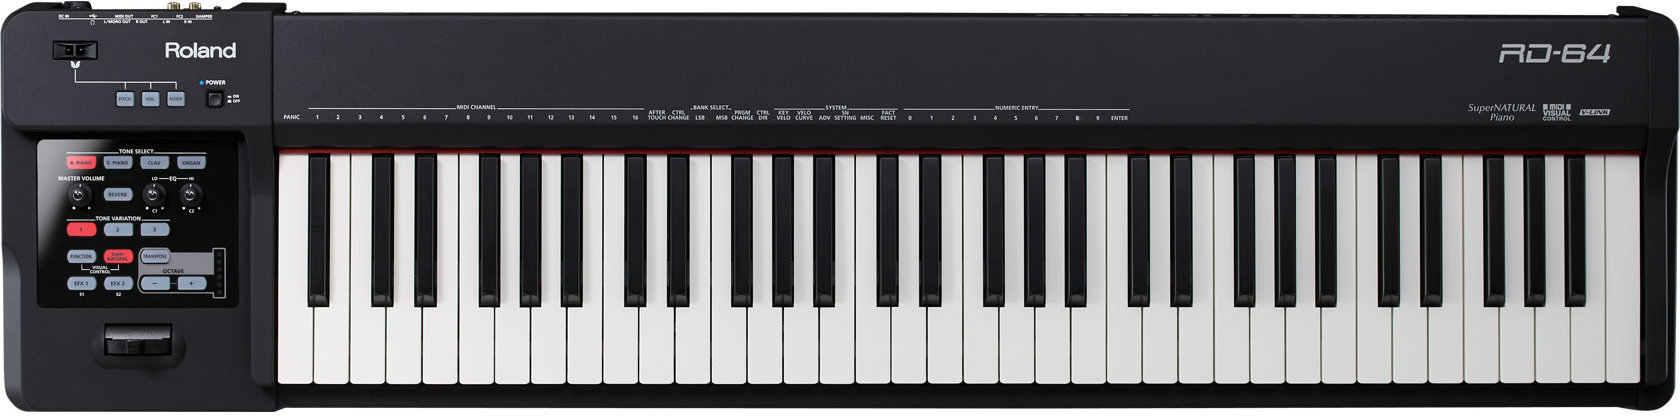 Digitaal stagepiano Roland RD 64 Digital piano